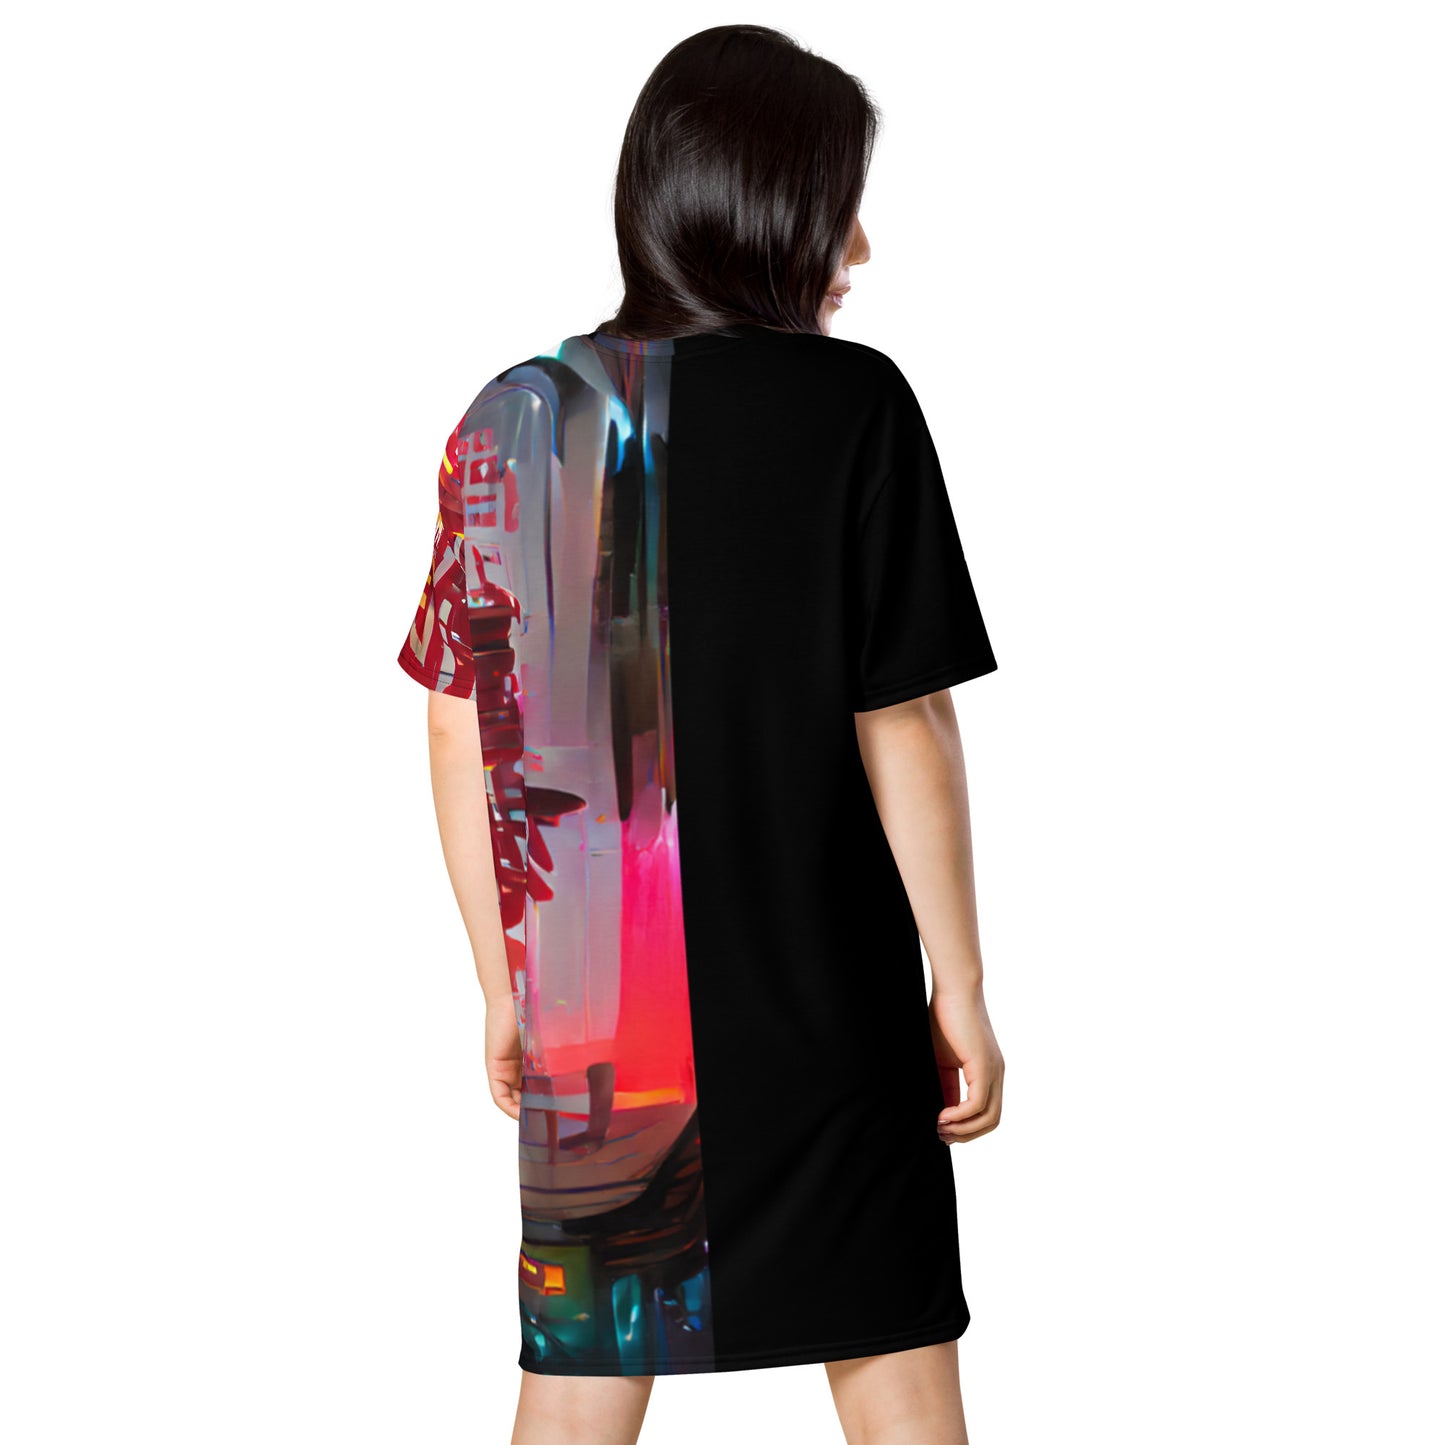 Half Black Half Báijiǔ - Womens T-Shirt Dress